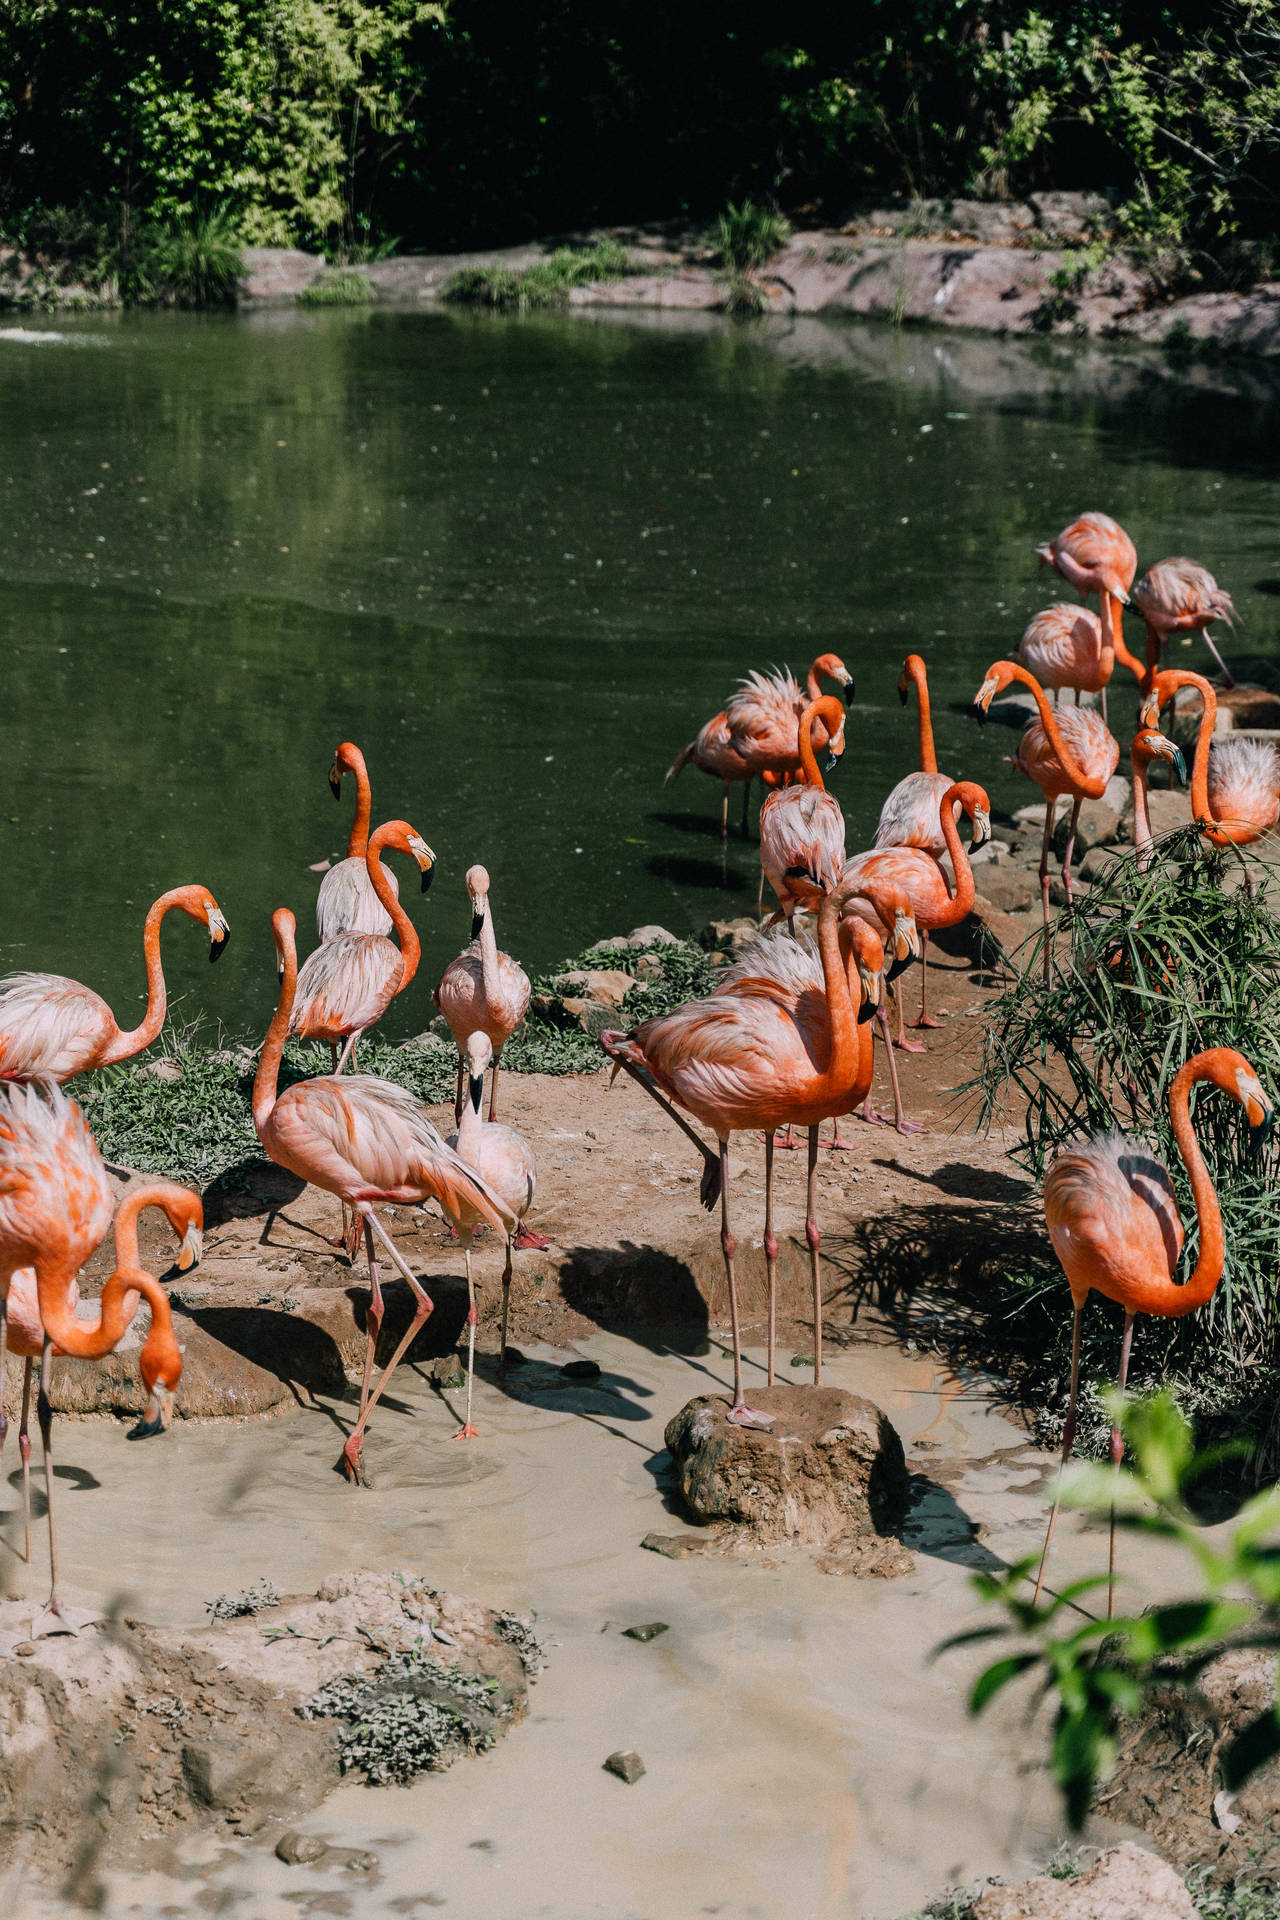 Coolest Iphone Flamingo Wallpaper